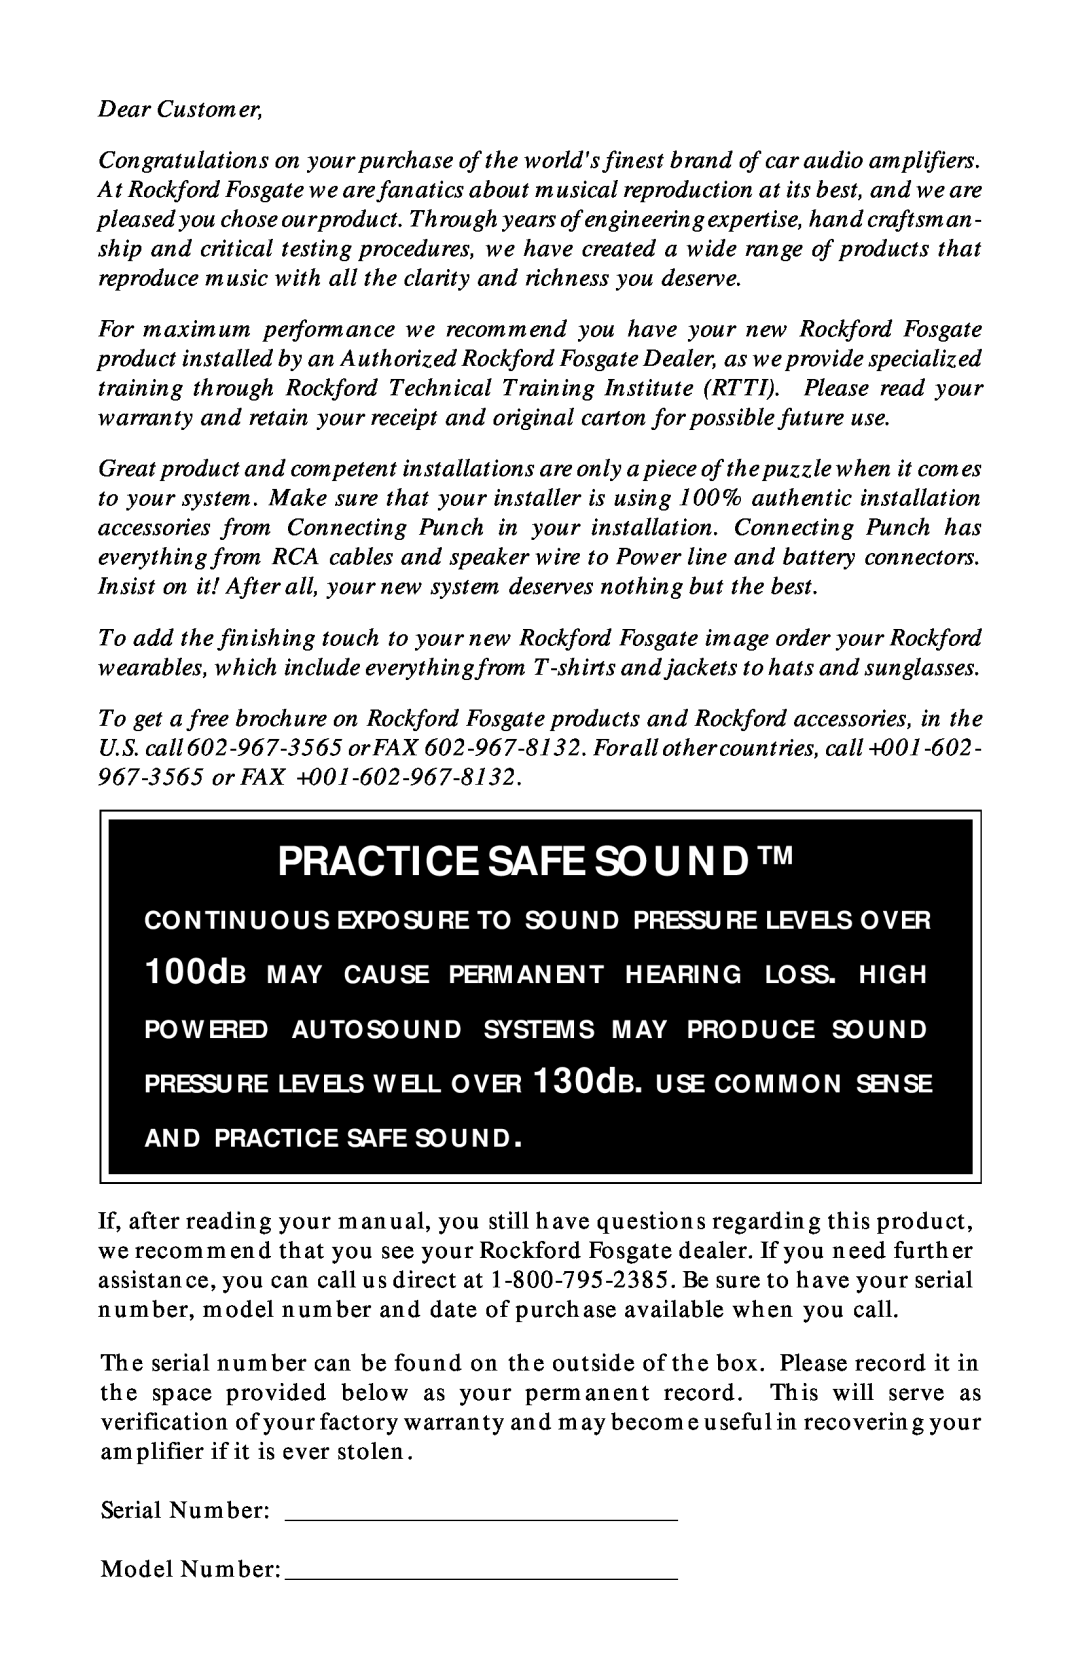 Rockford Fosgate 5.3x manual Practice Safe Sound 